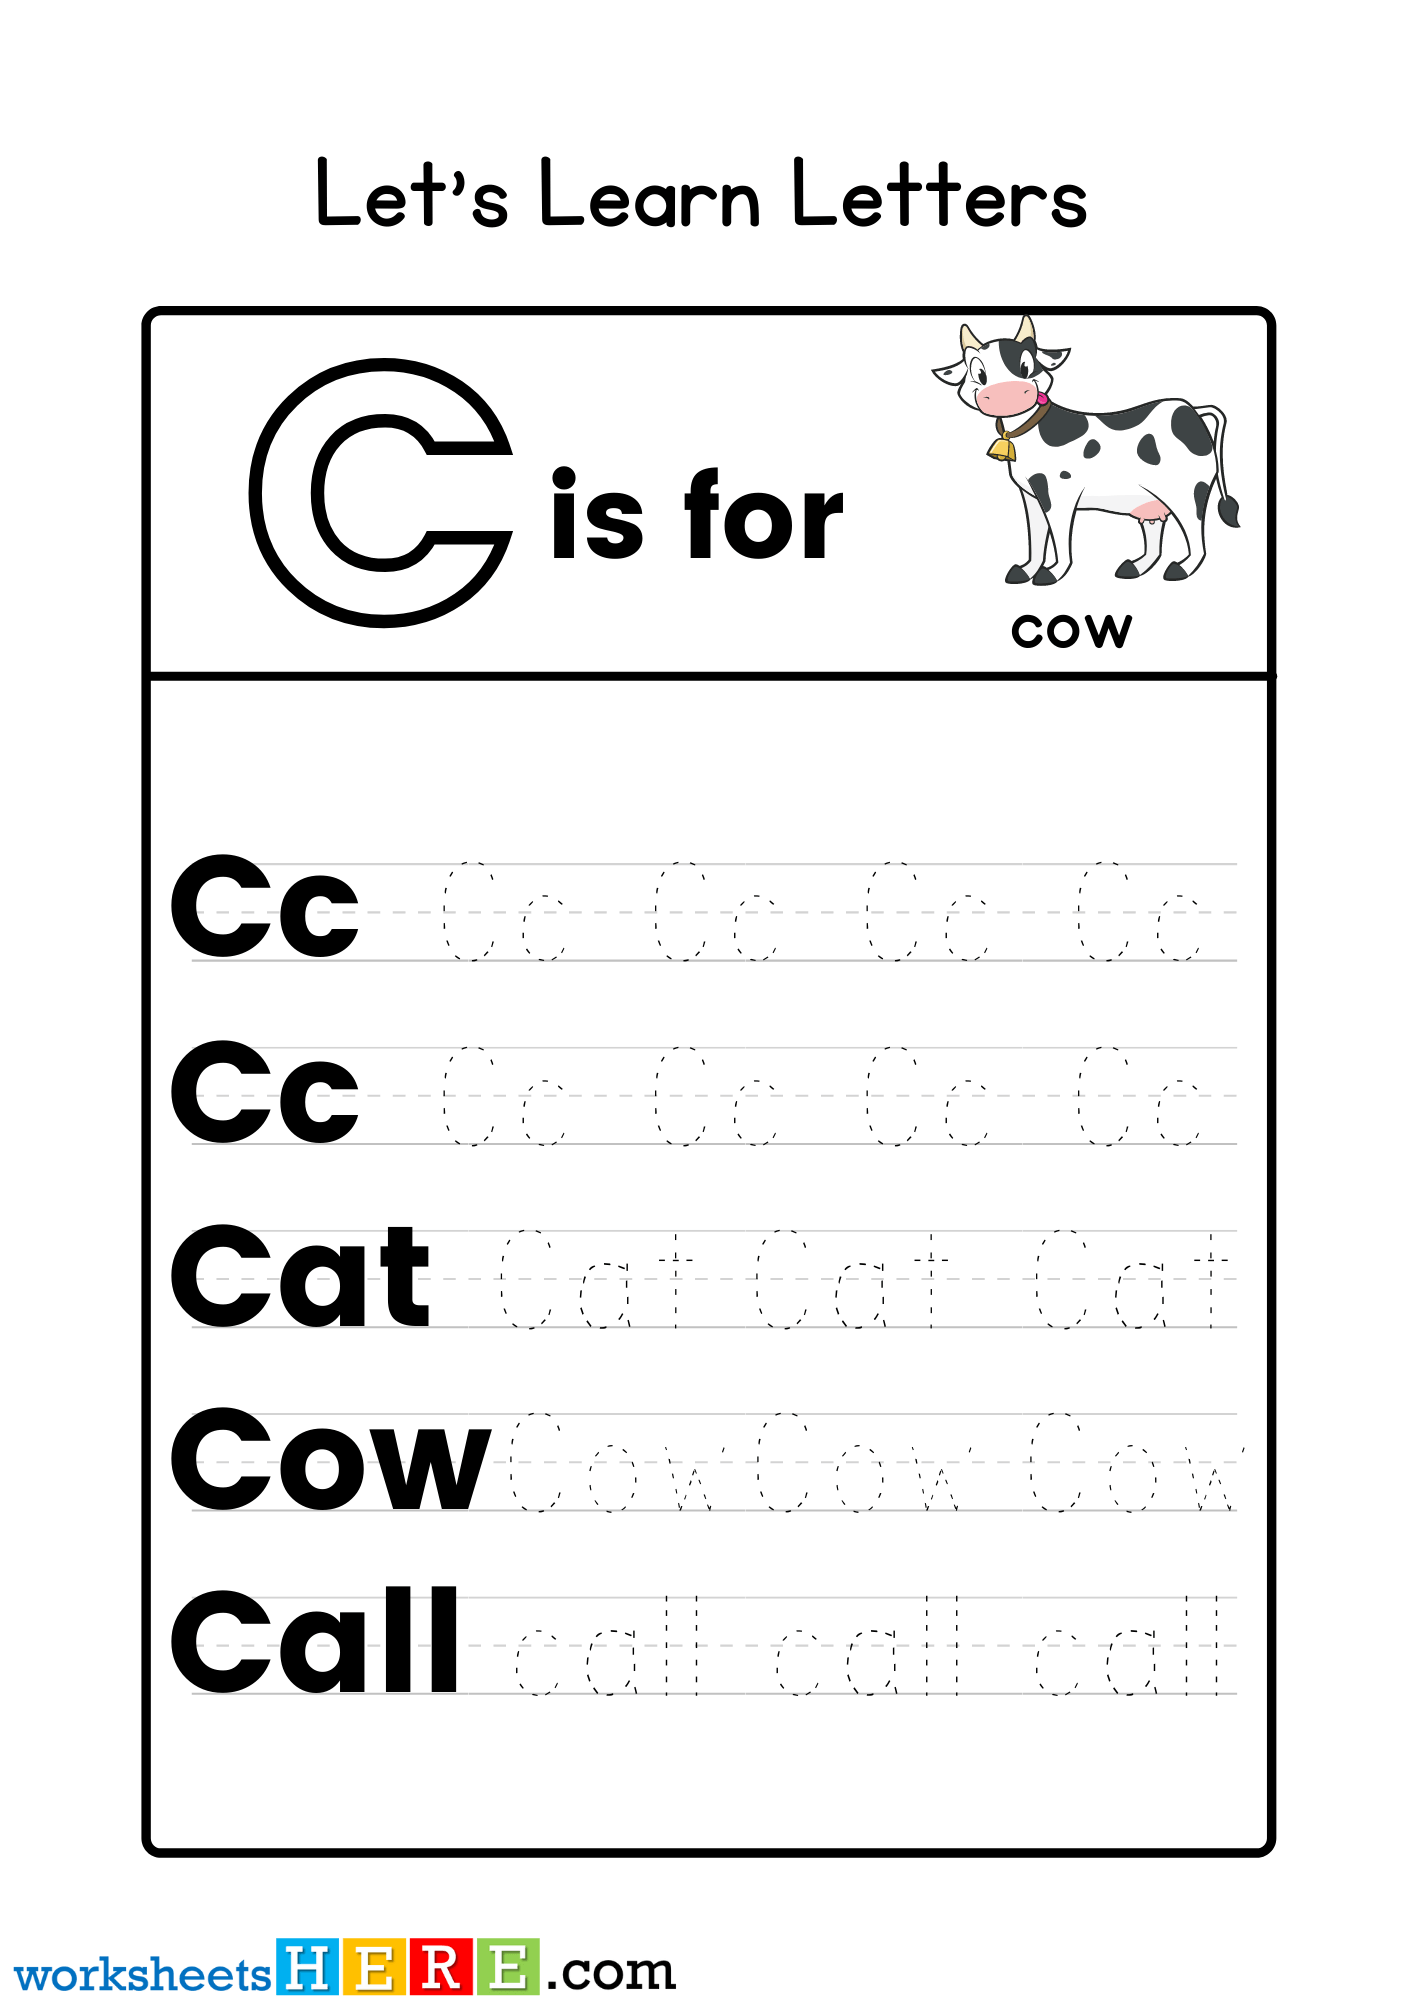 Learn Letters, Letter C Tracing Activity PDF Worksheet for Kindergarten